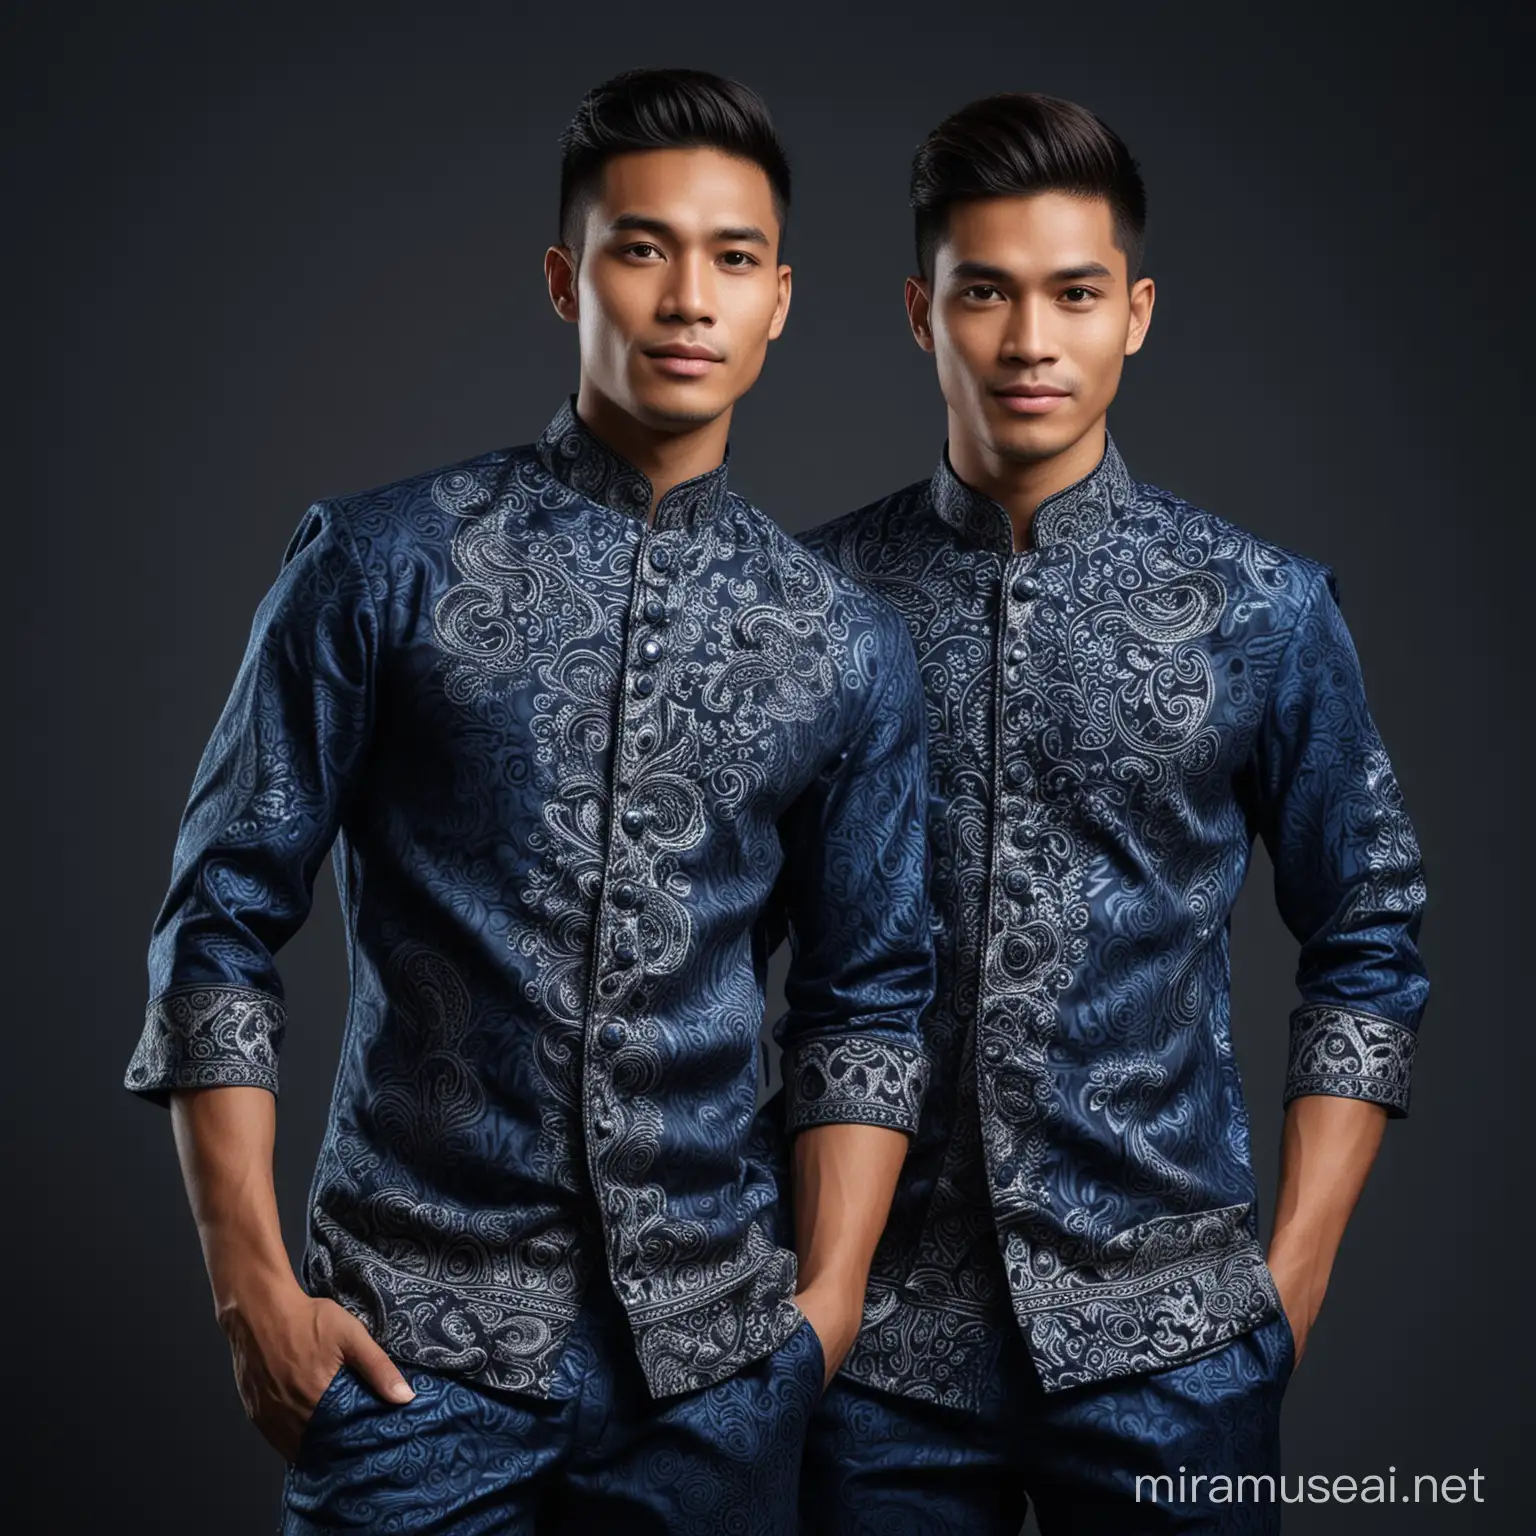 Indonesian Men in Luxurious Blue Batik Uniforms